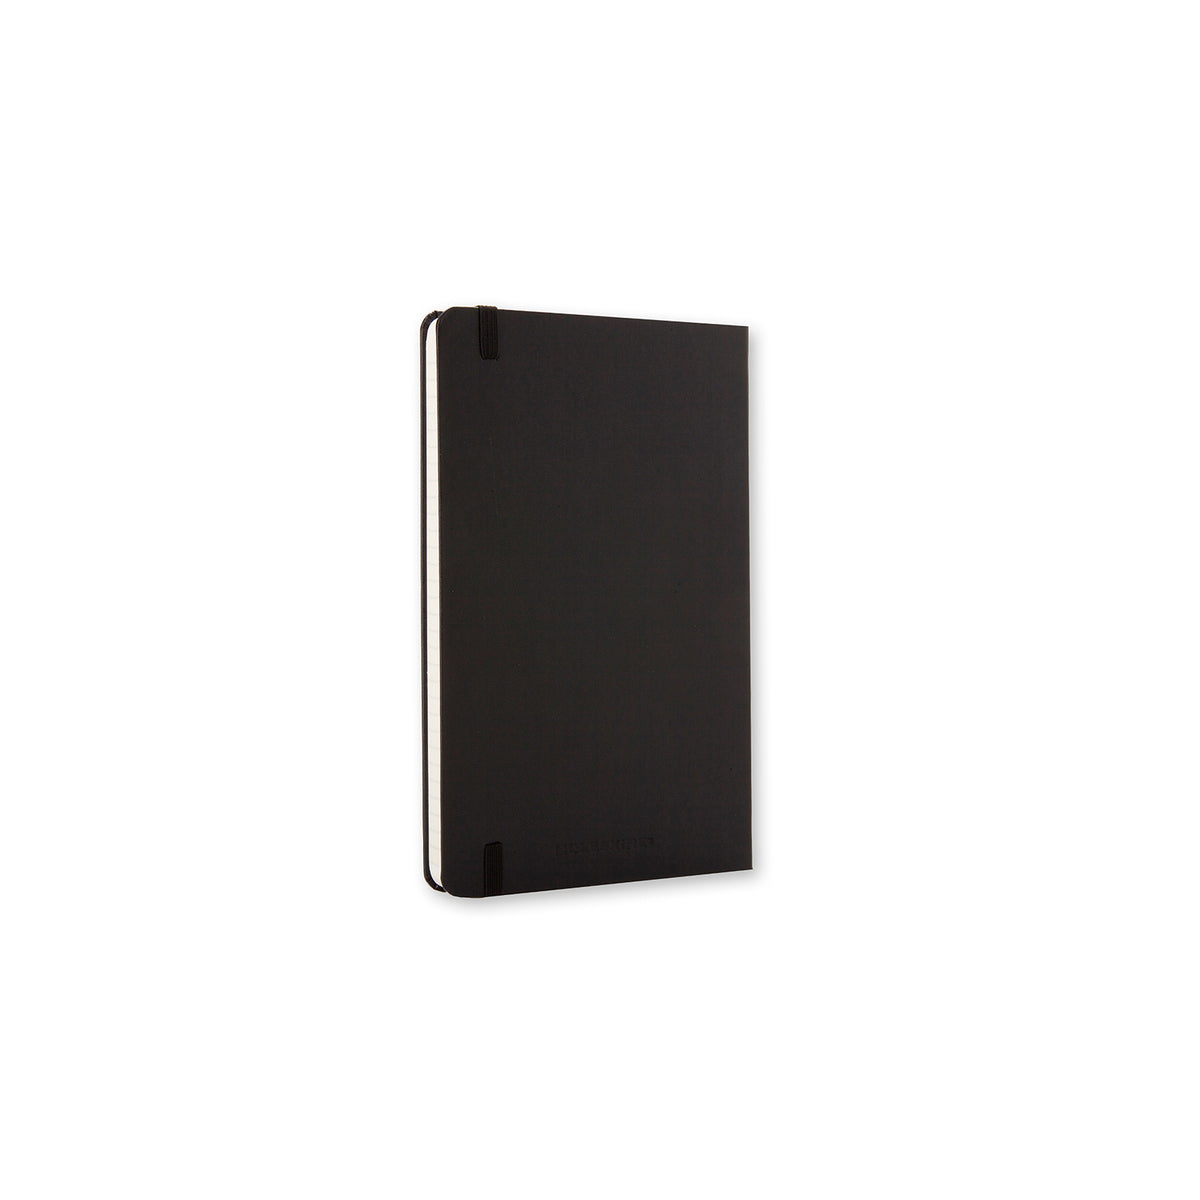 Moleskine - Classic Hard Cover Notebook - Ruled - Large - Black